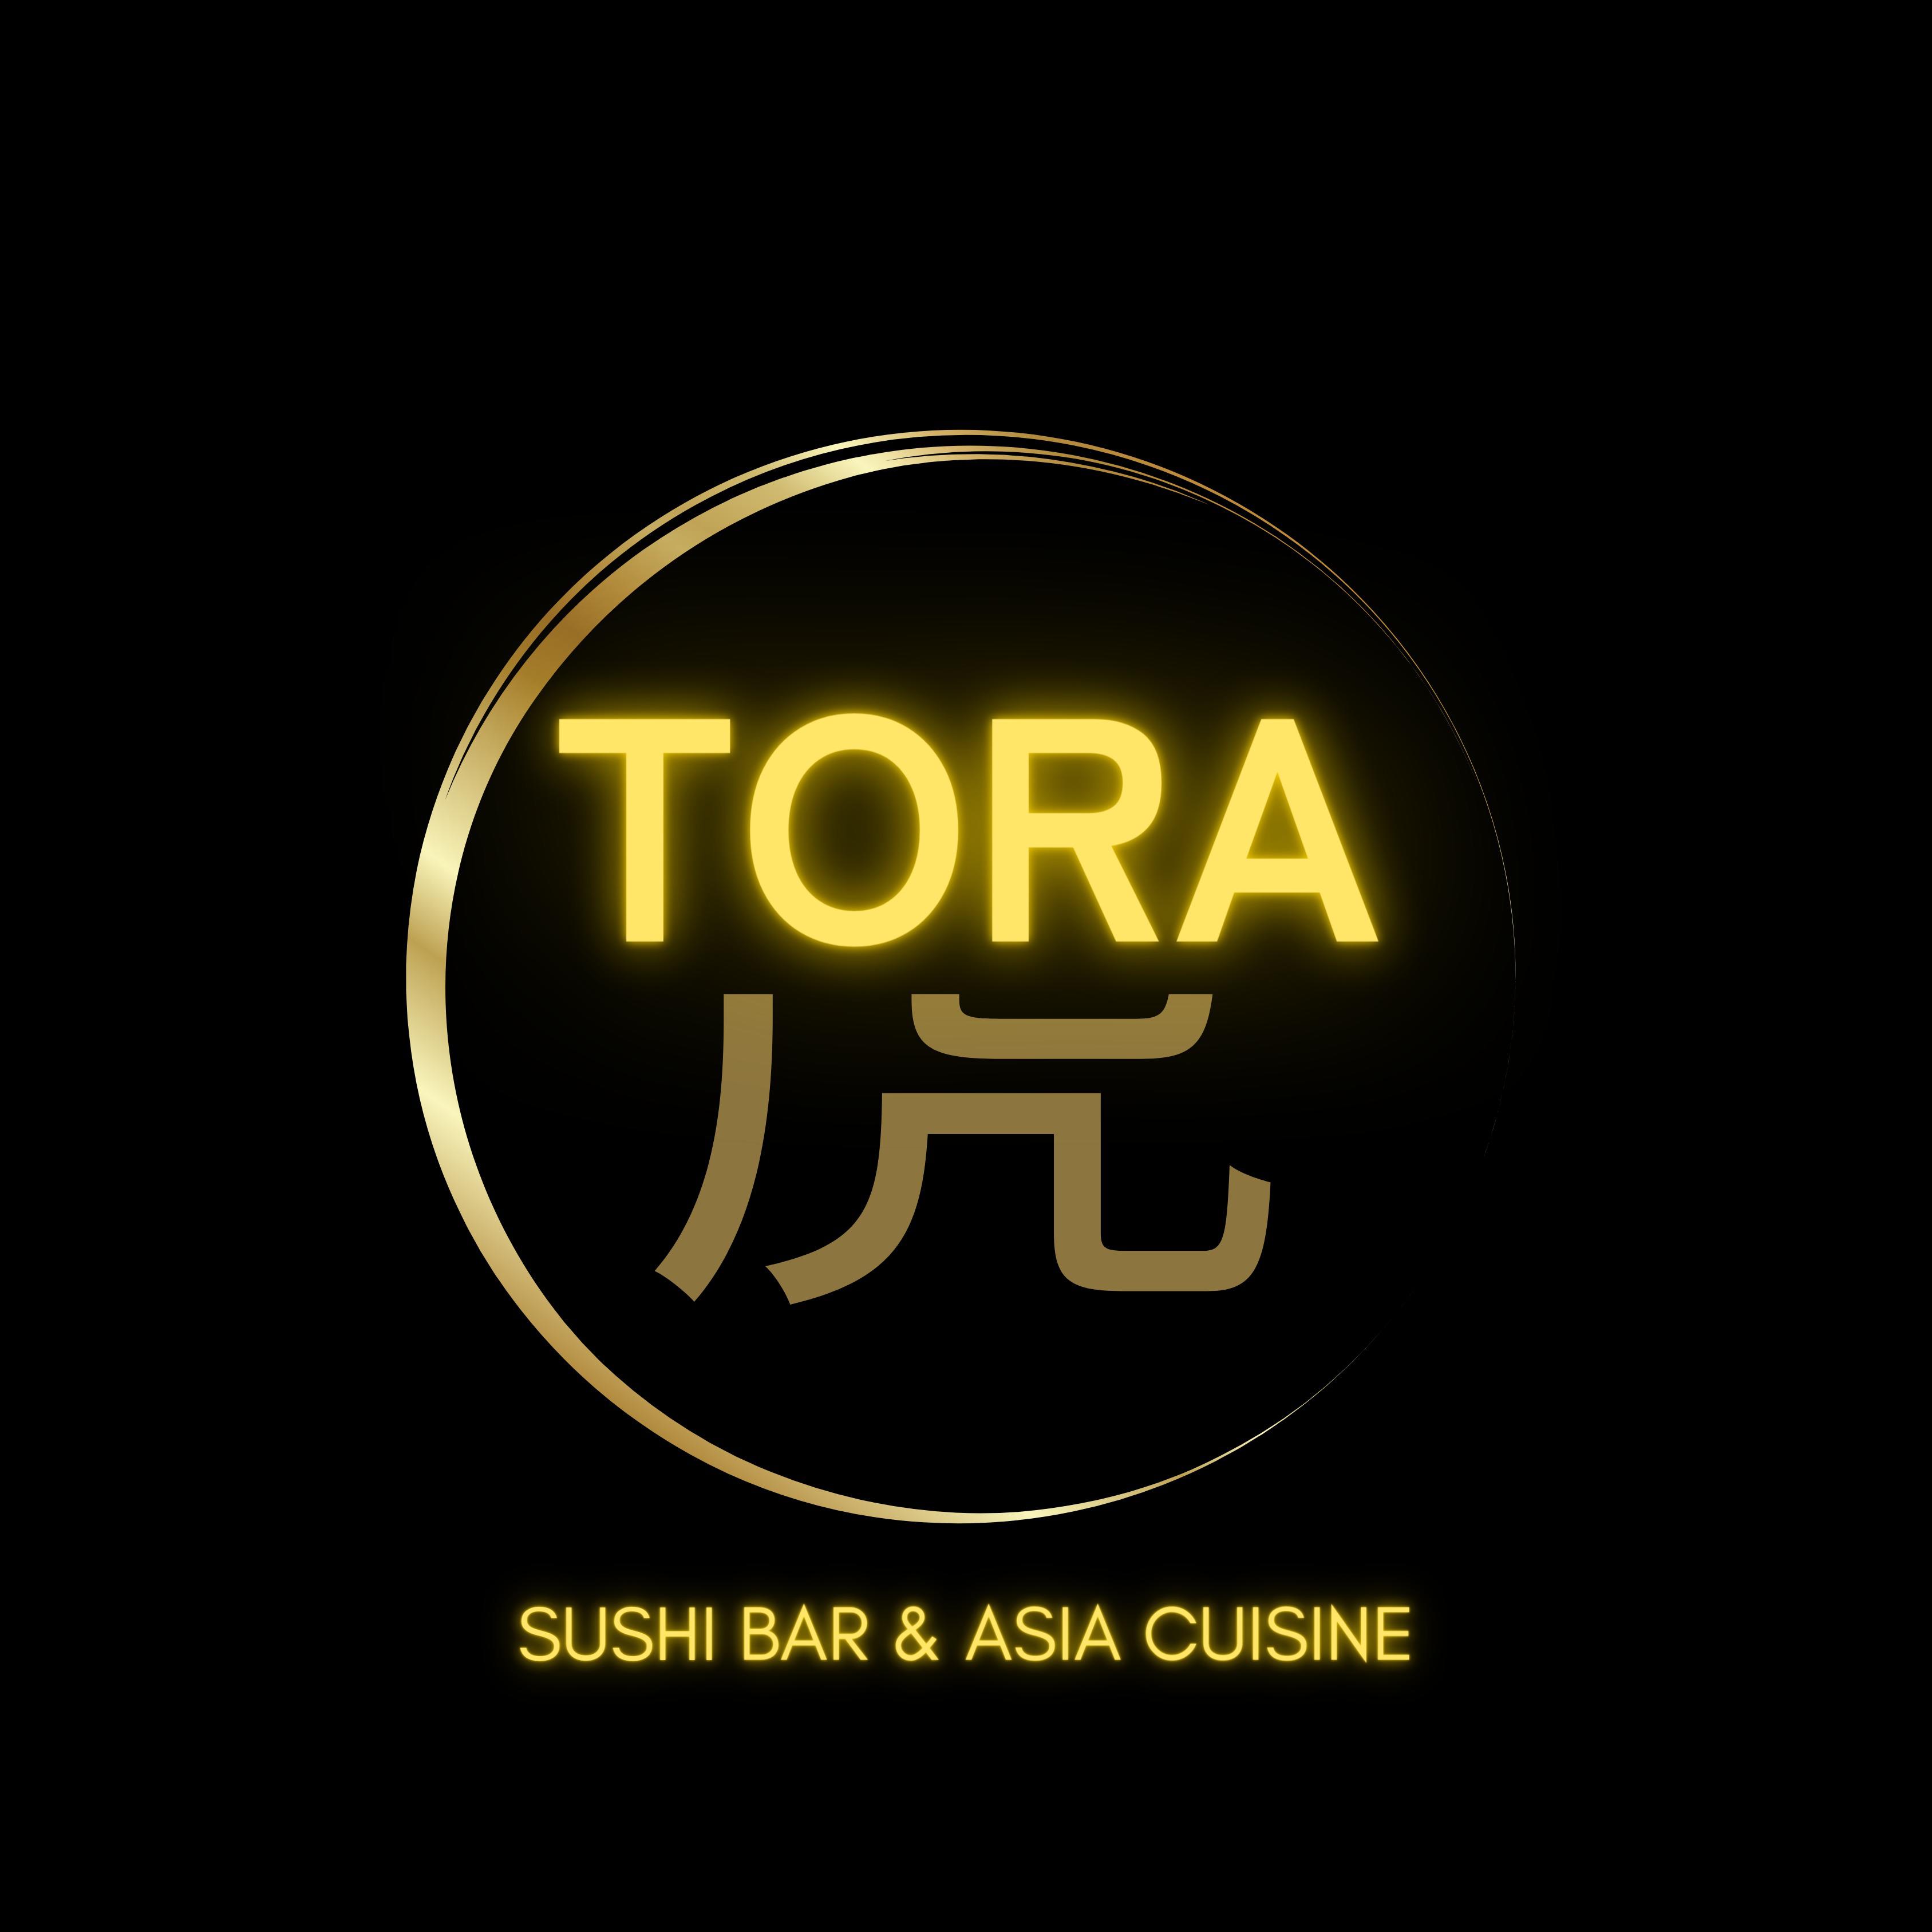 Tora - Sushi Bar & Asia Cuisine Logo